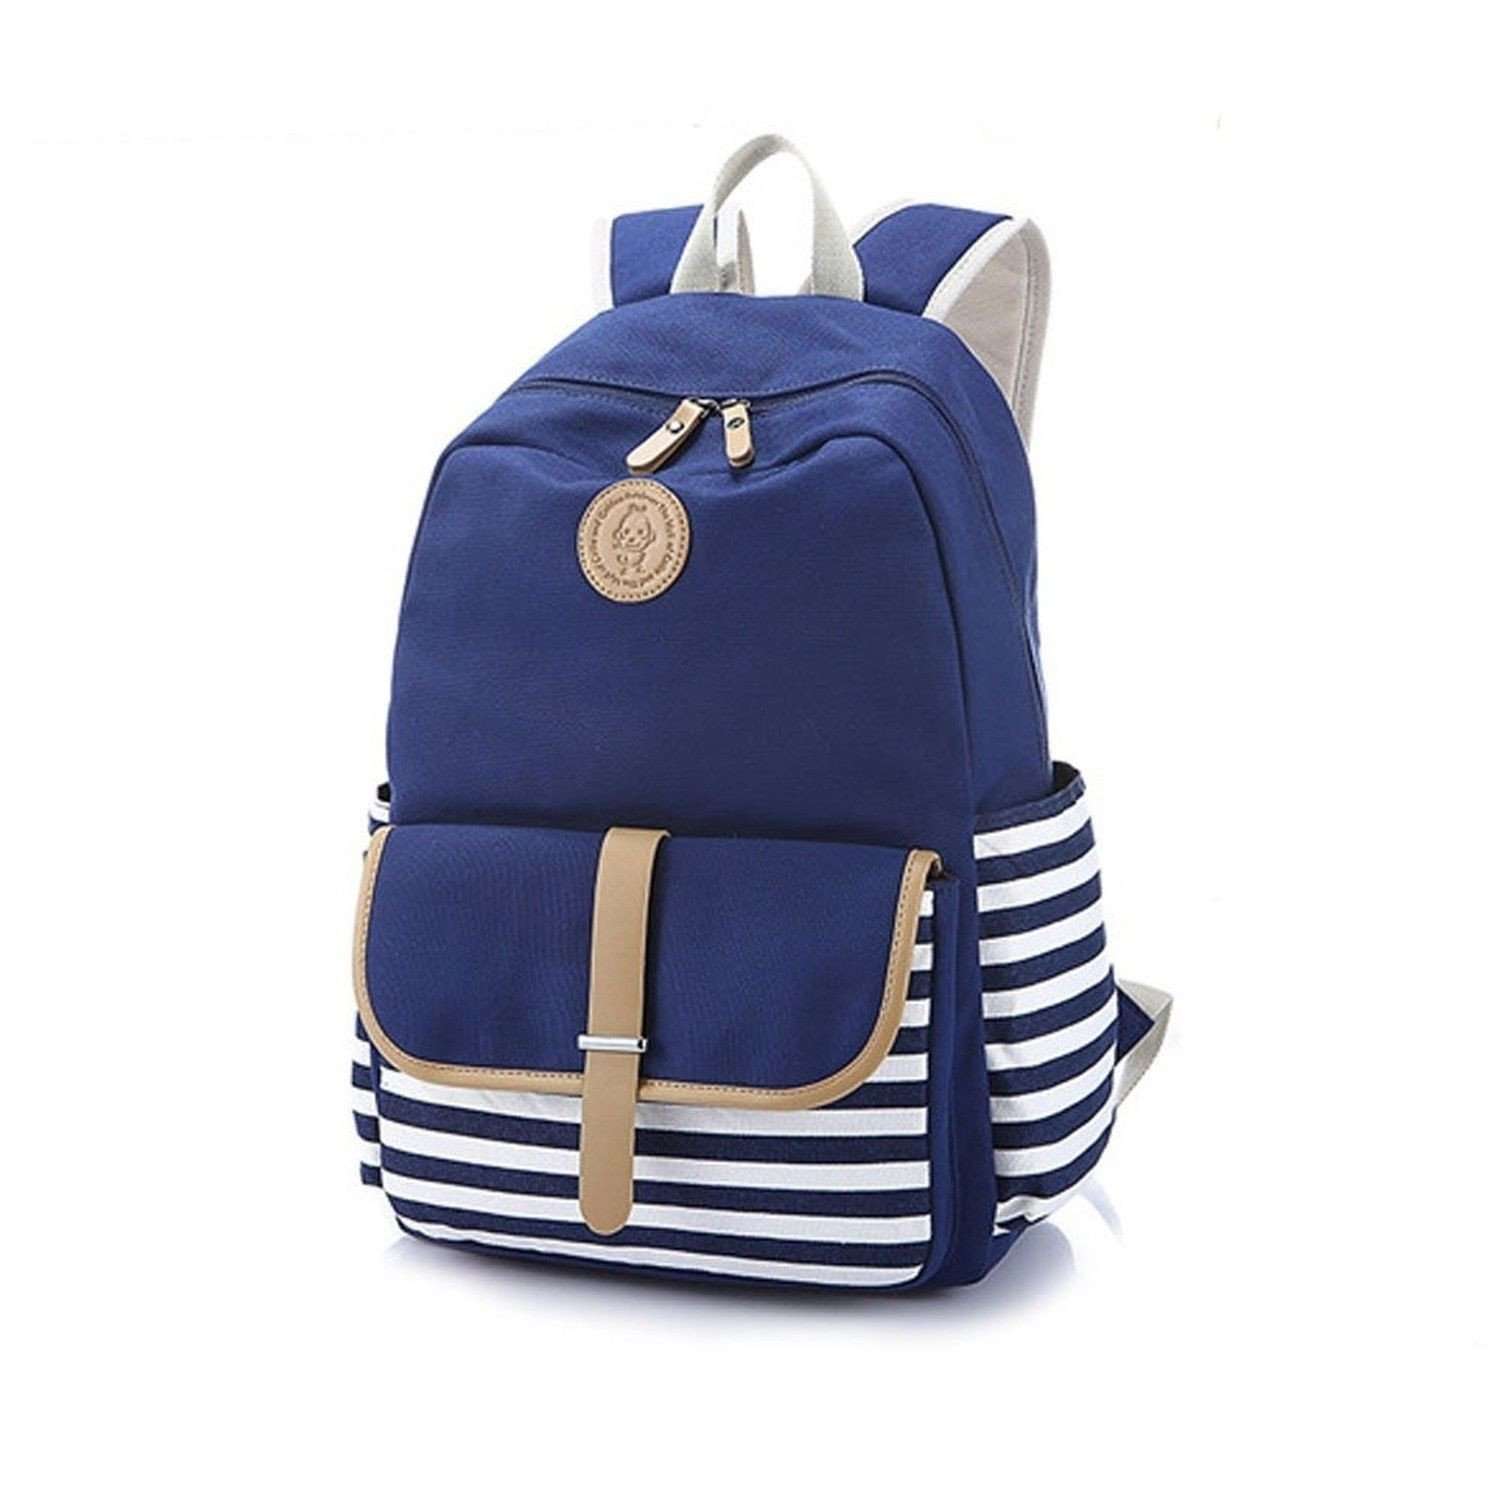 Abshoo Causal Travel Canvas Rucksack Backpacks For Girls School Bookbags Navy Swiftsly